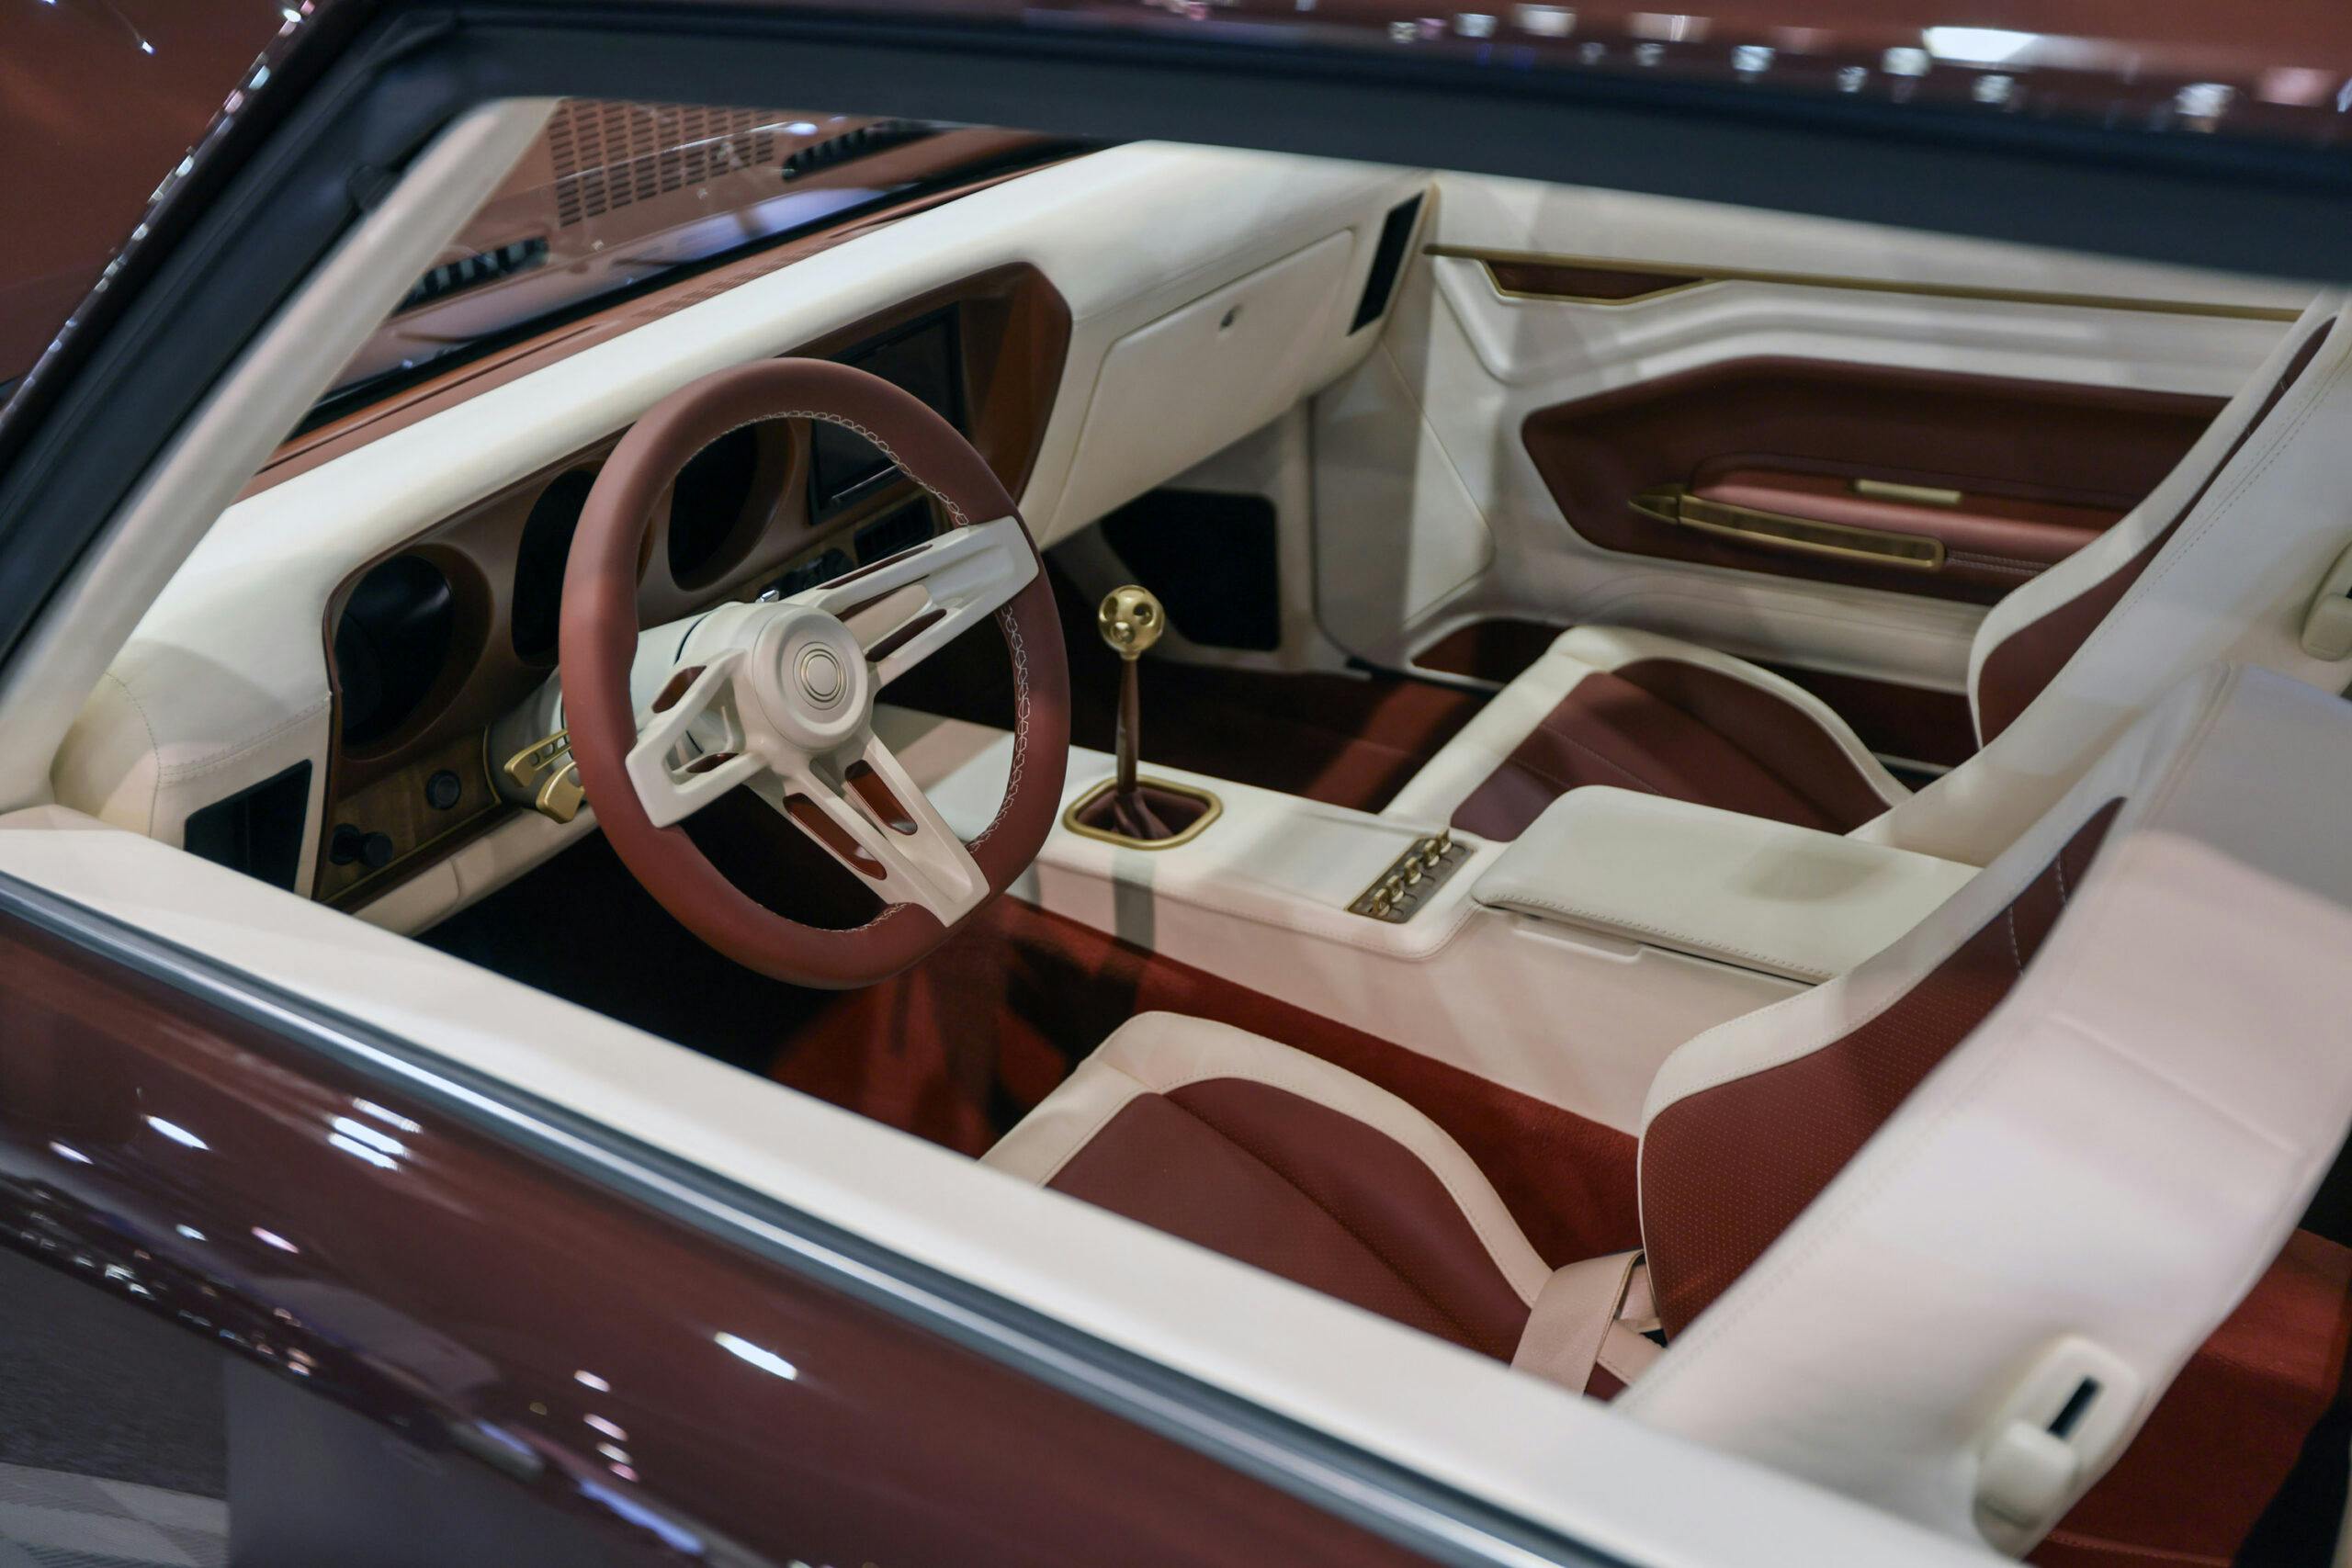 Kevin Hart Droppa GTO interior two tone